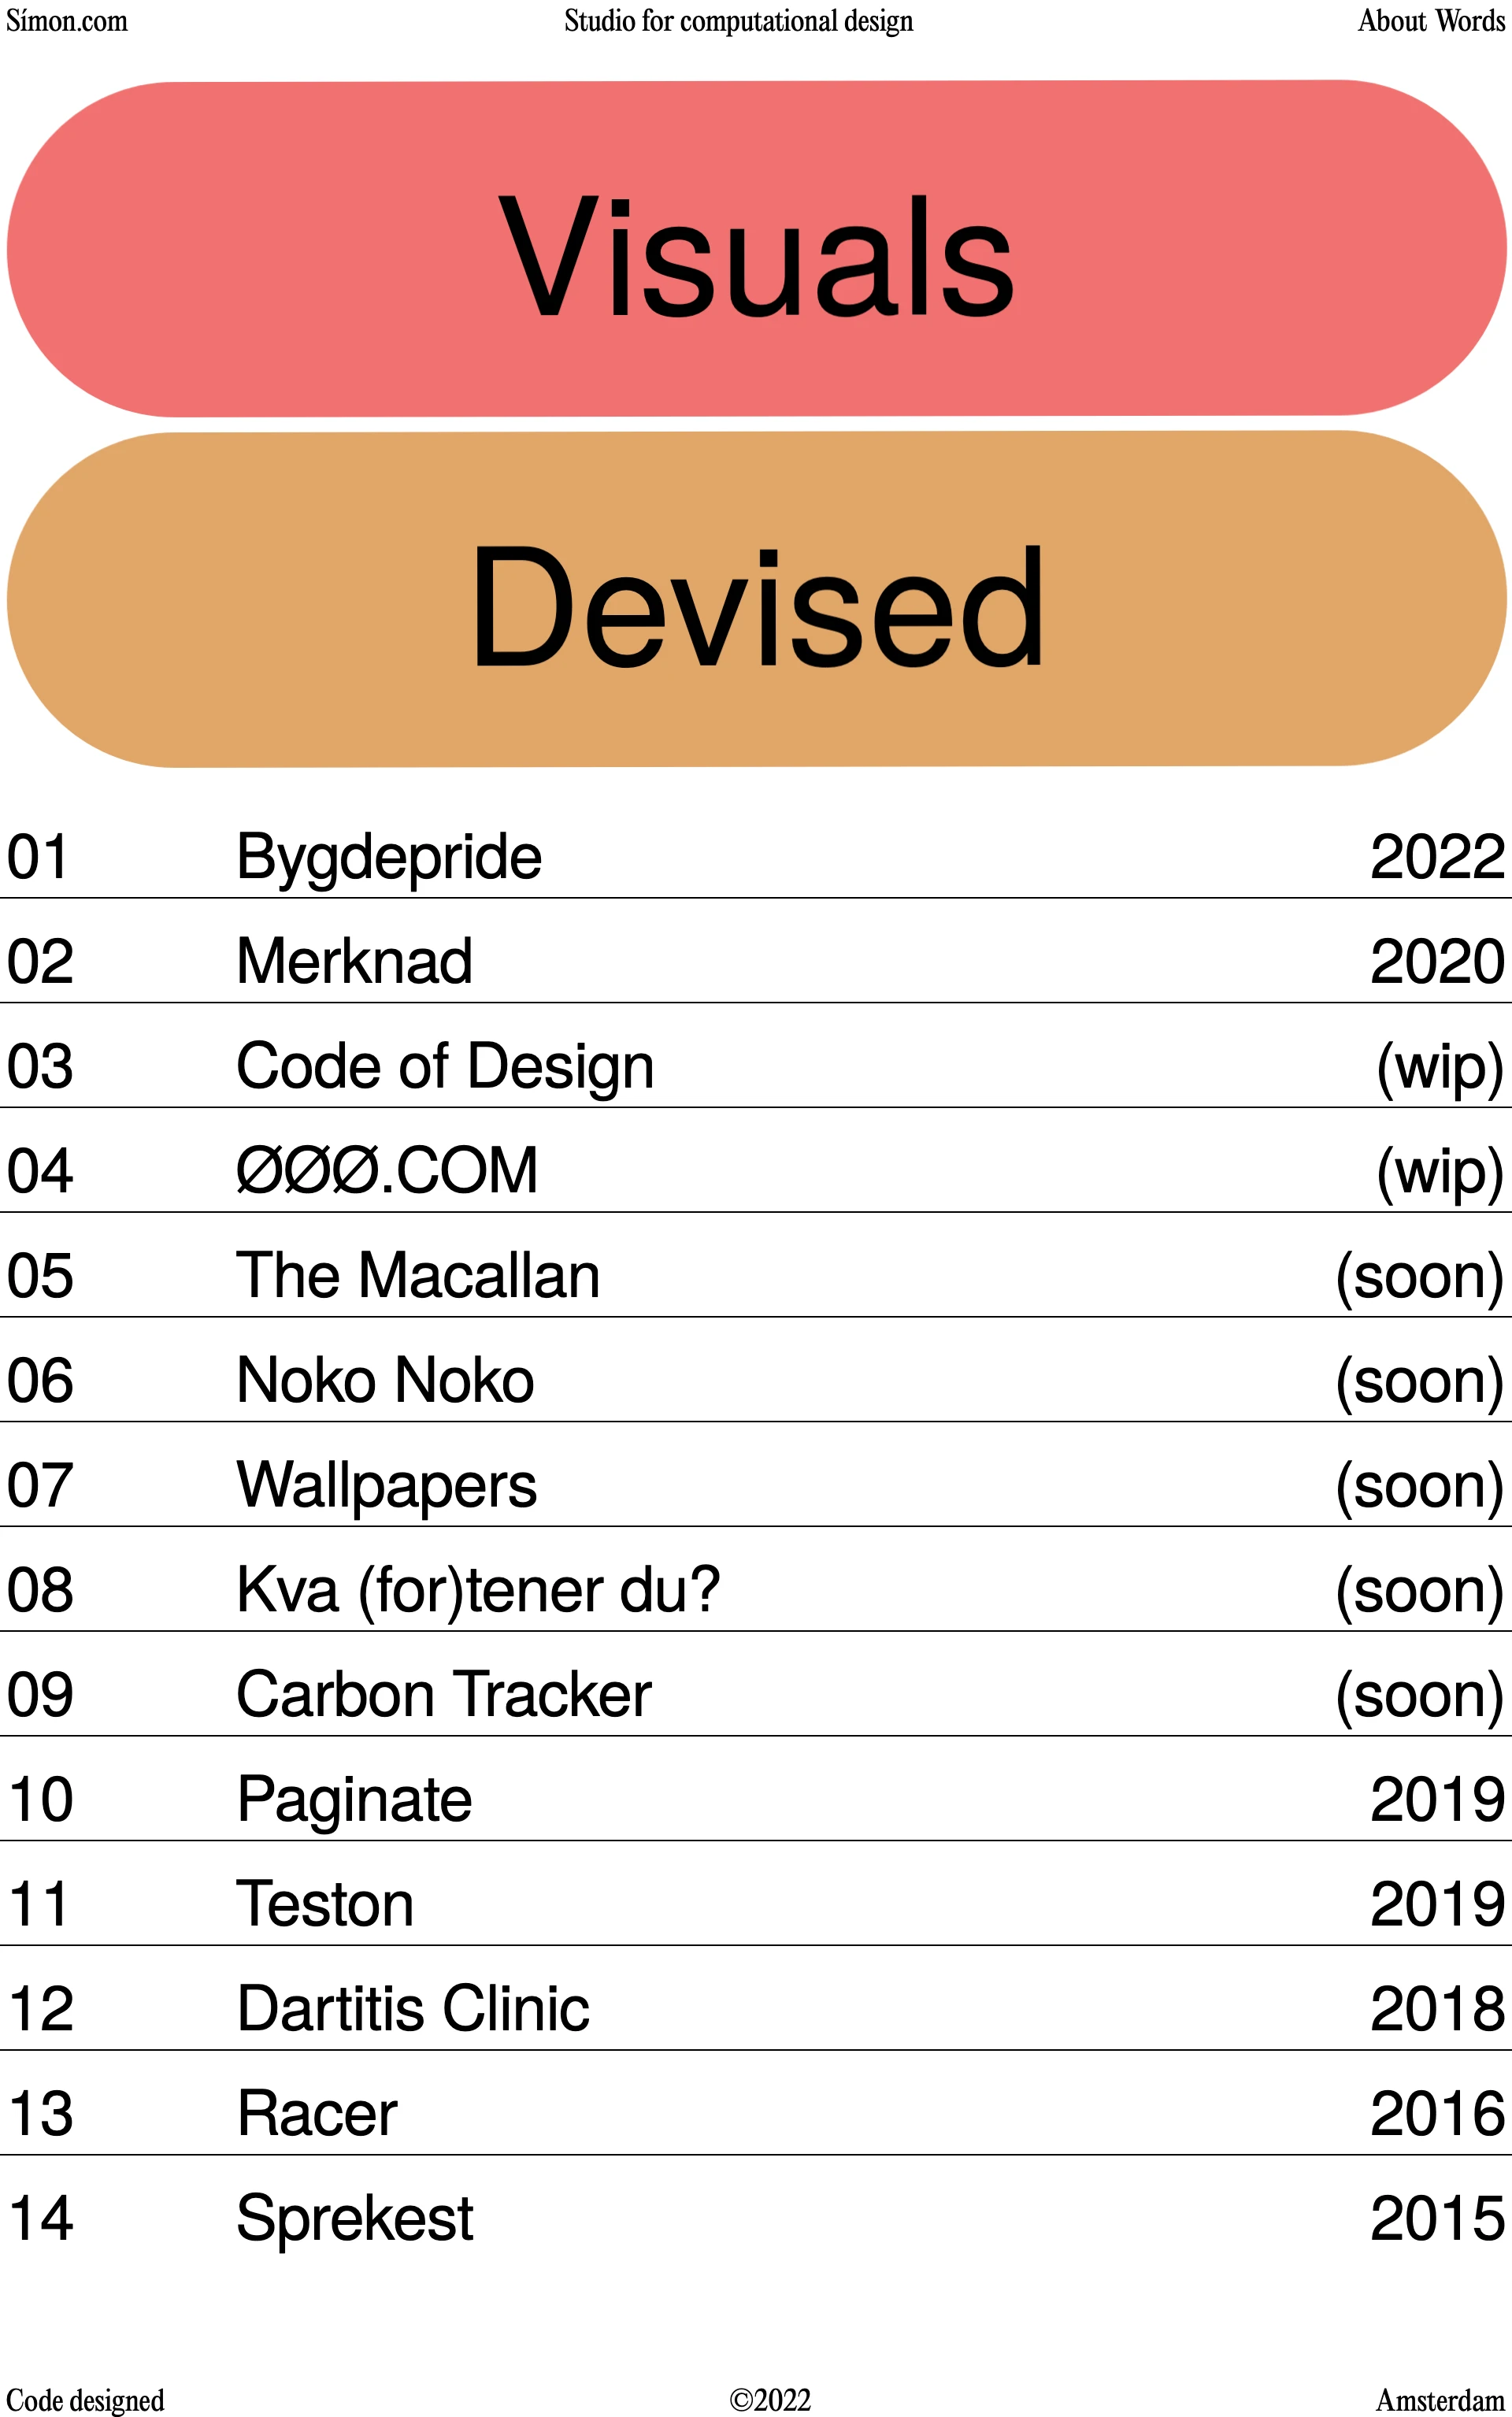 Símon Landing Page Example: Norwegian designer working on computational design, generative art, and identities. Based in Amsterdam.